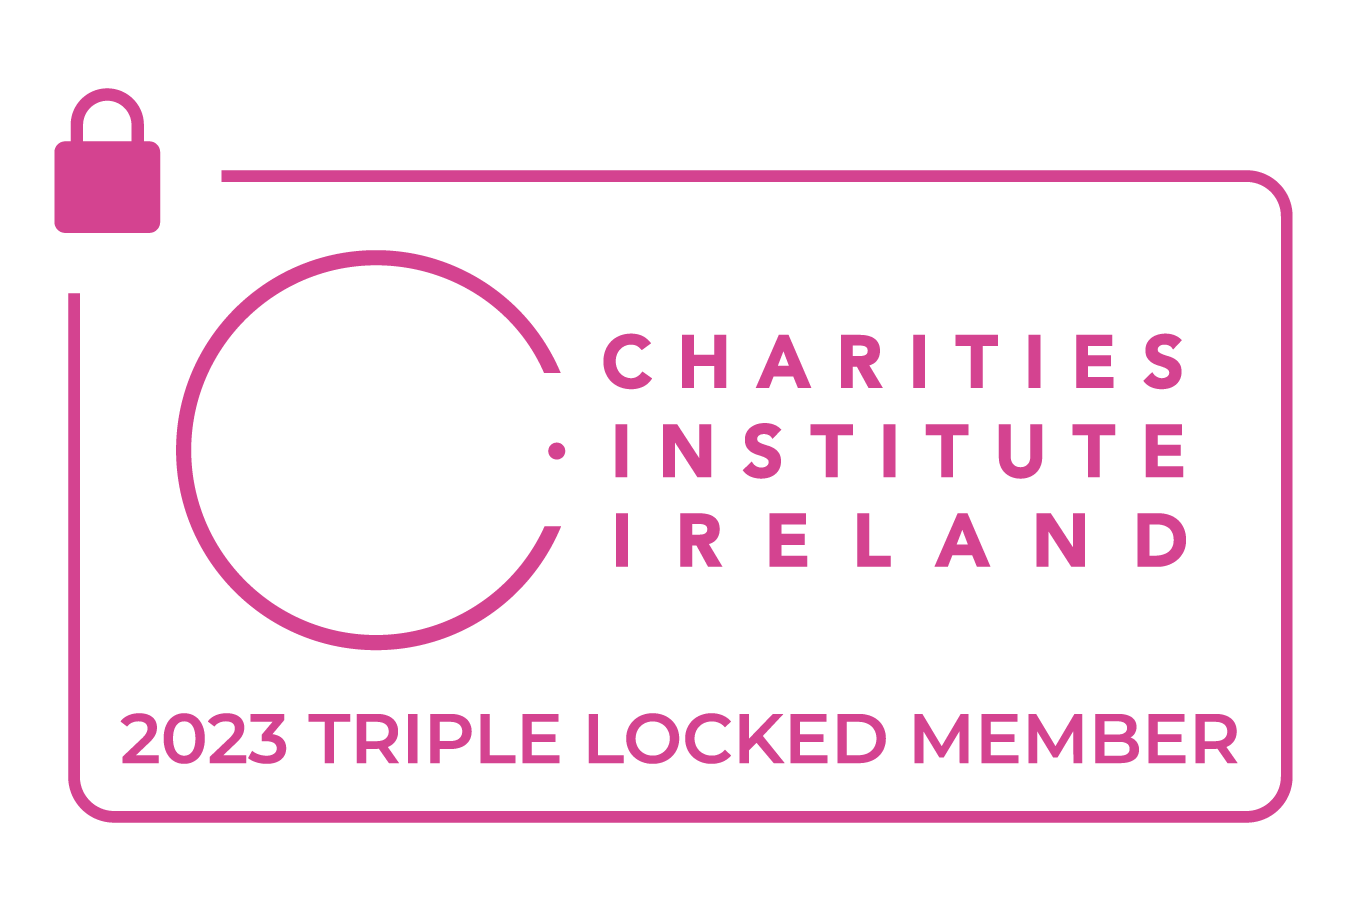 Charities Institute Ireland, 2023 triple locked member